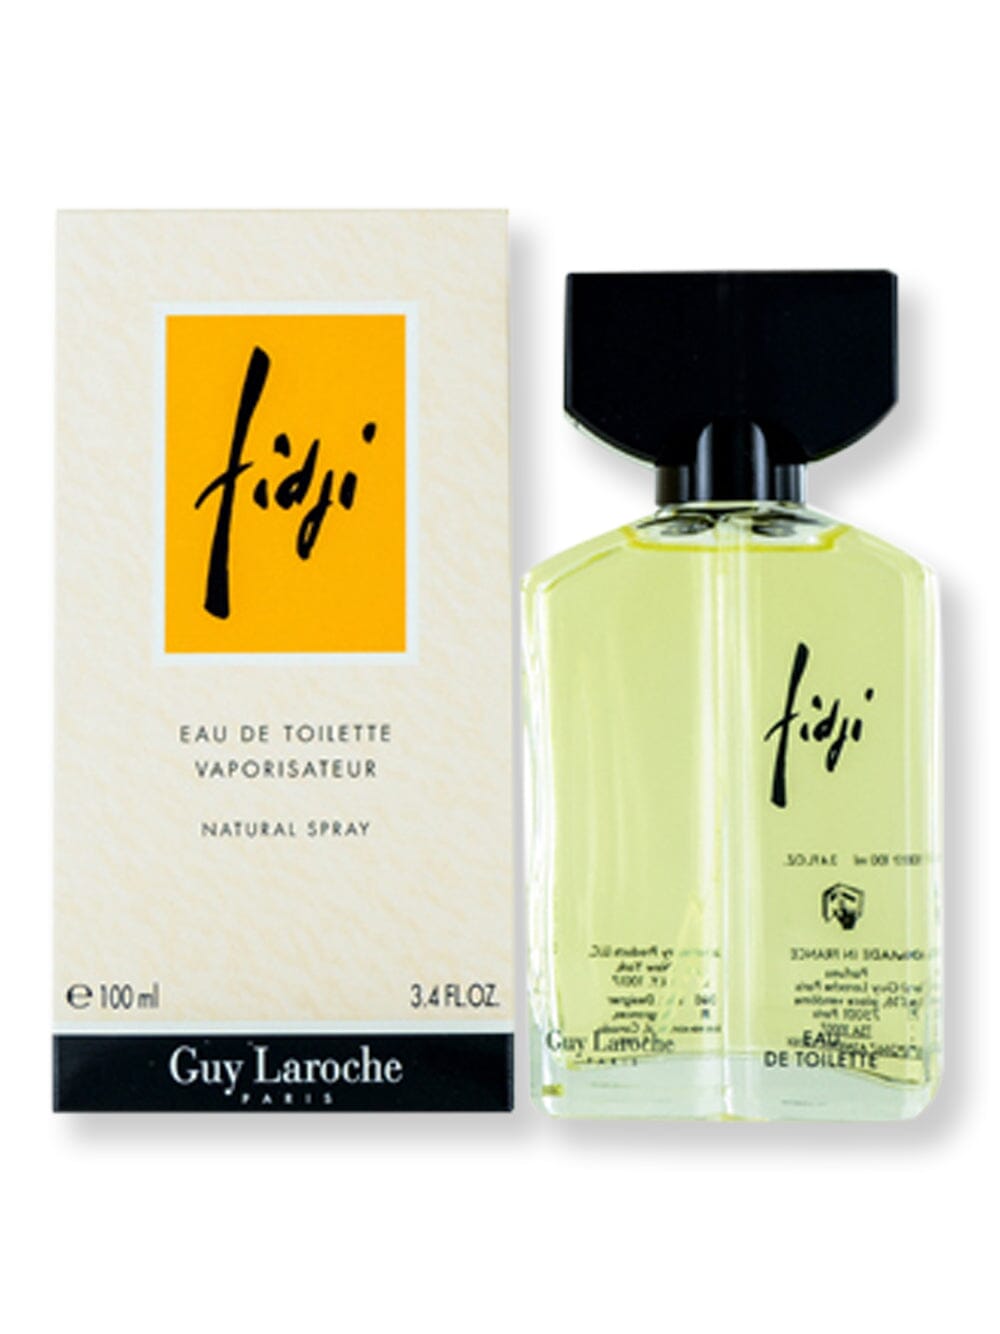 Guy Laroche Guy Laroche Fidji Laroche EDT Spray 3.4 oz100 ml Perfume 